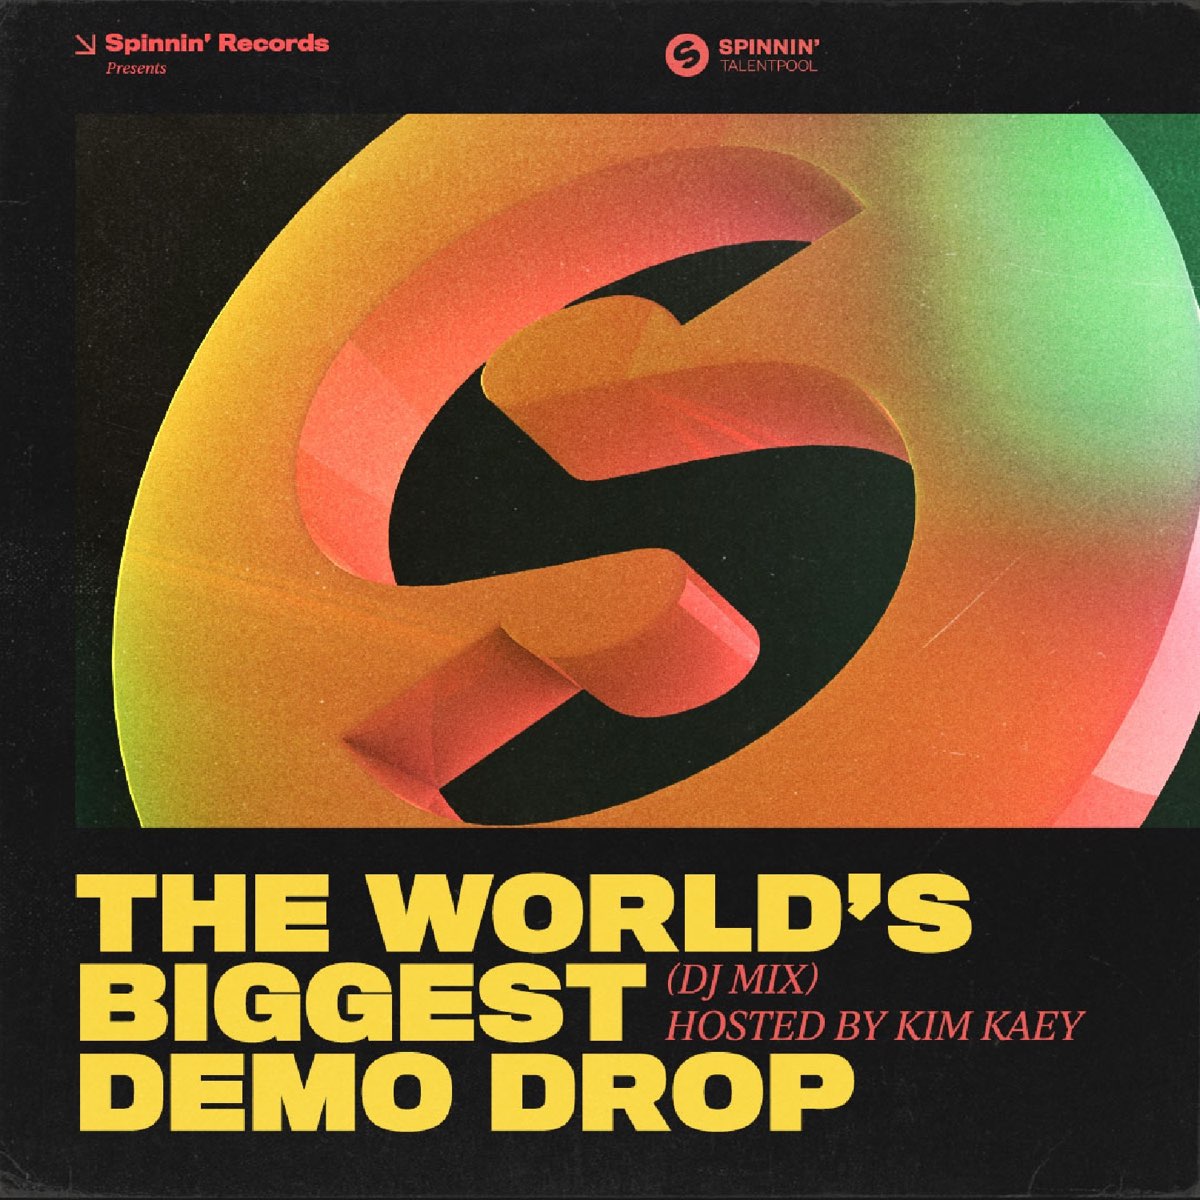 Spinnin' Records Presents: The World's Biggest Demo Drop (DJ Mix) [hosted  by Kim Kaey] - Album by Kim Kaey - Apple Music